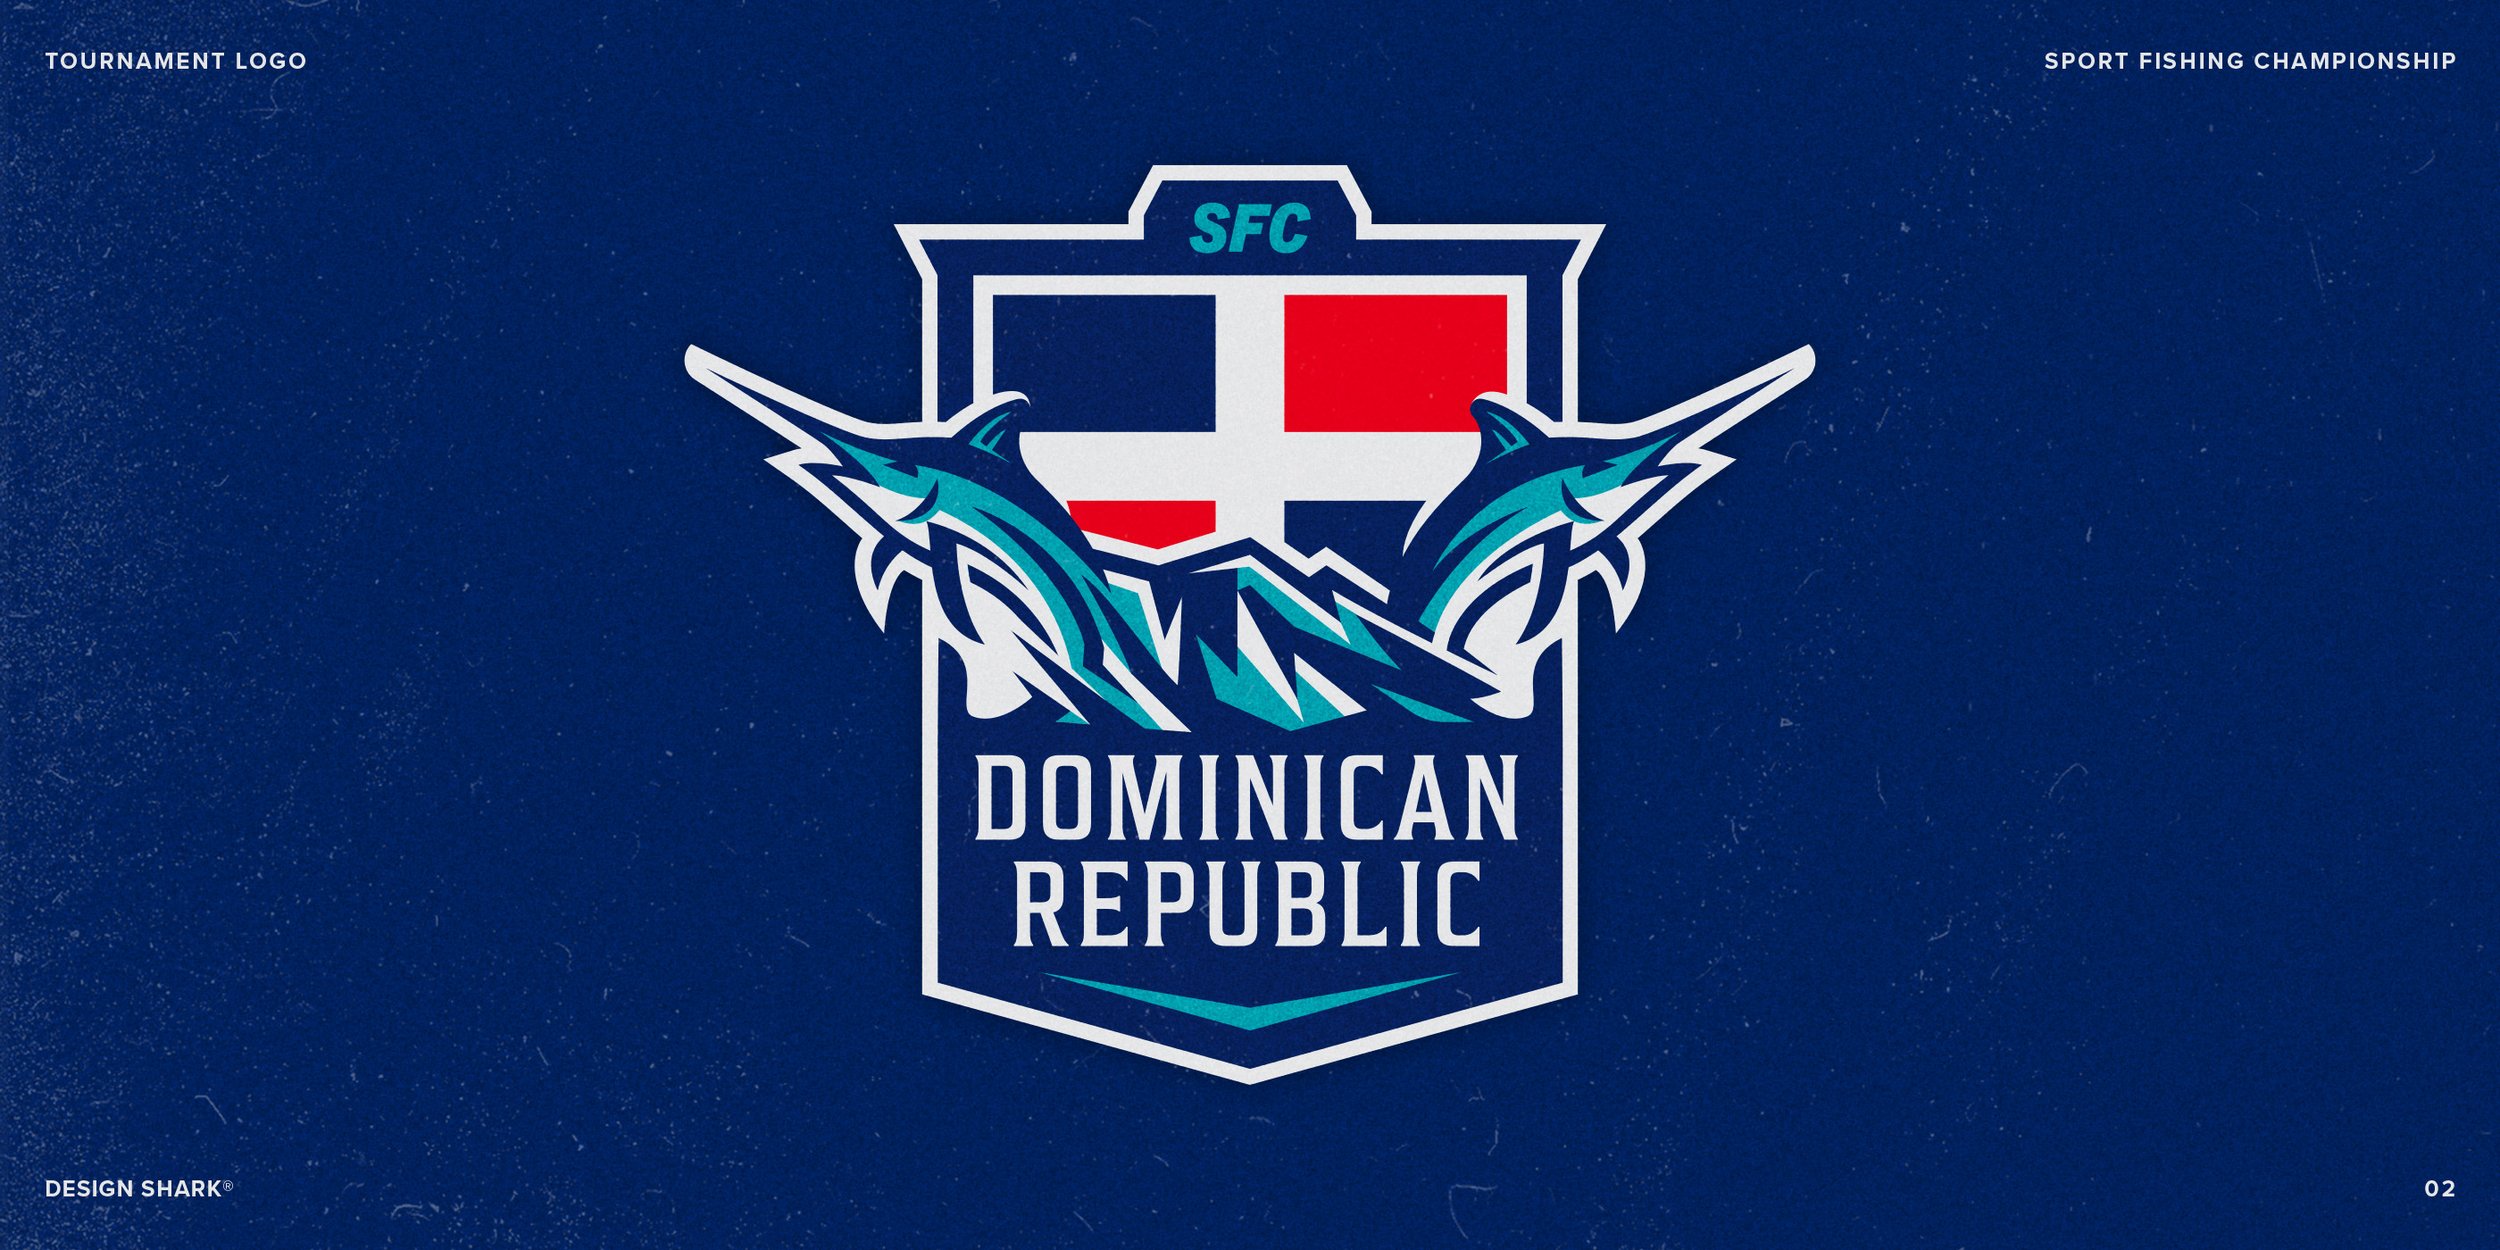 SFC – Tarpon Championship Logo by Dan Blessing